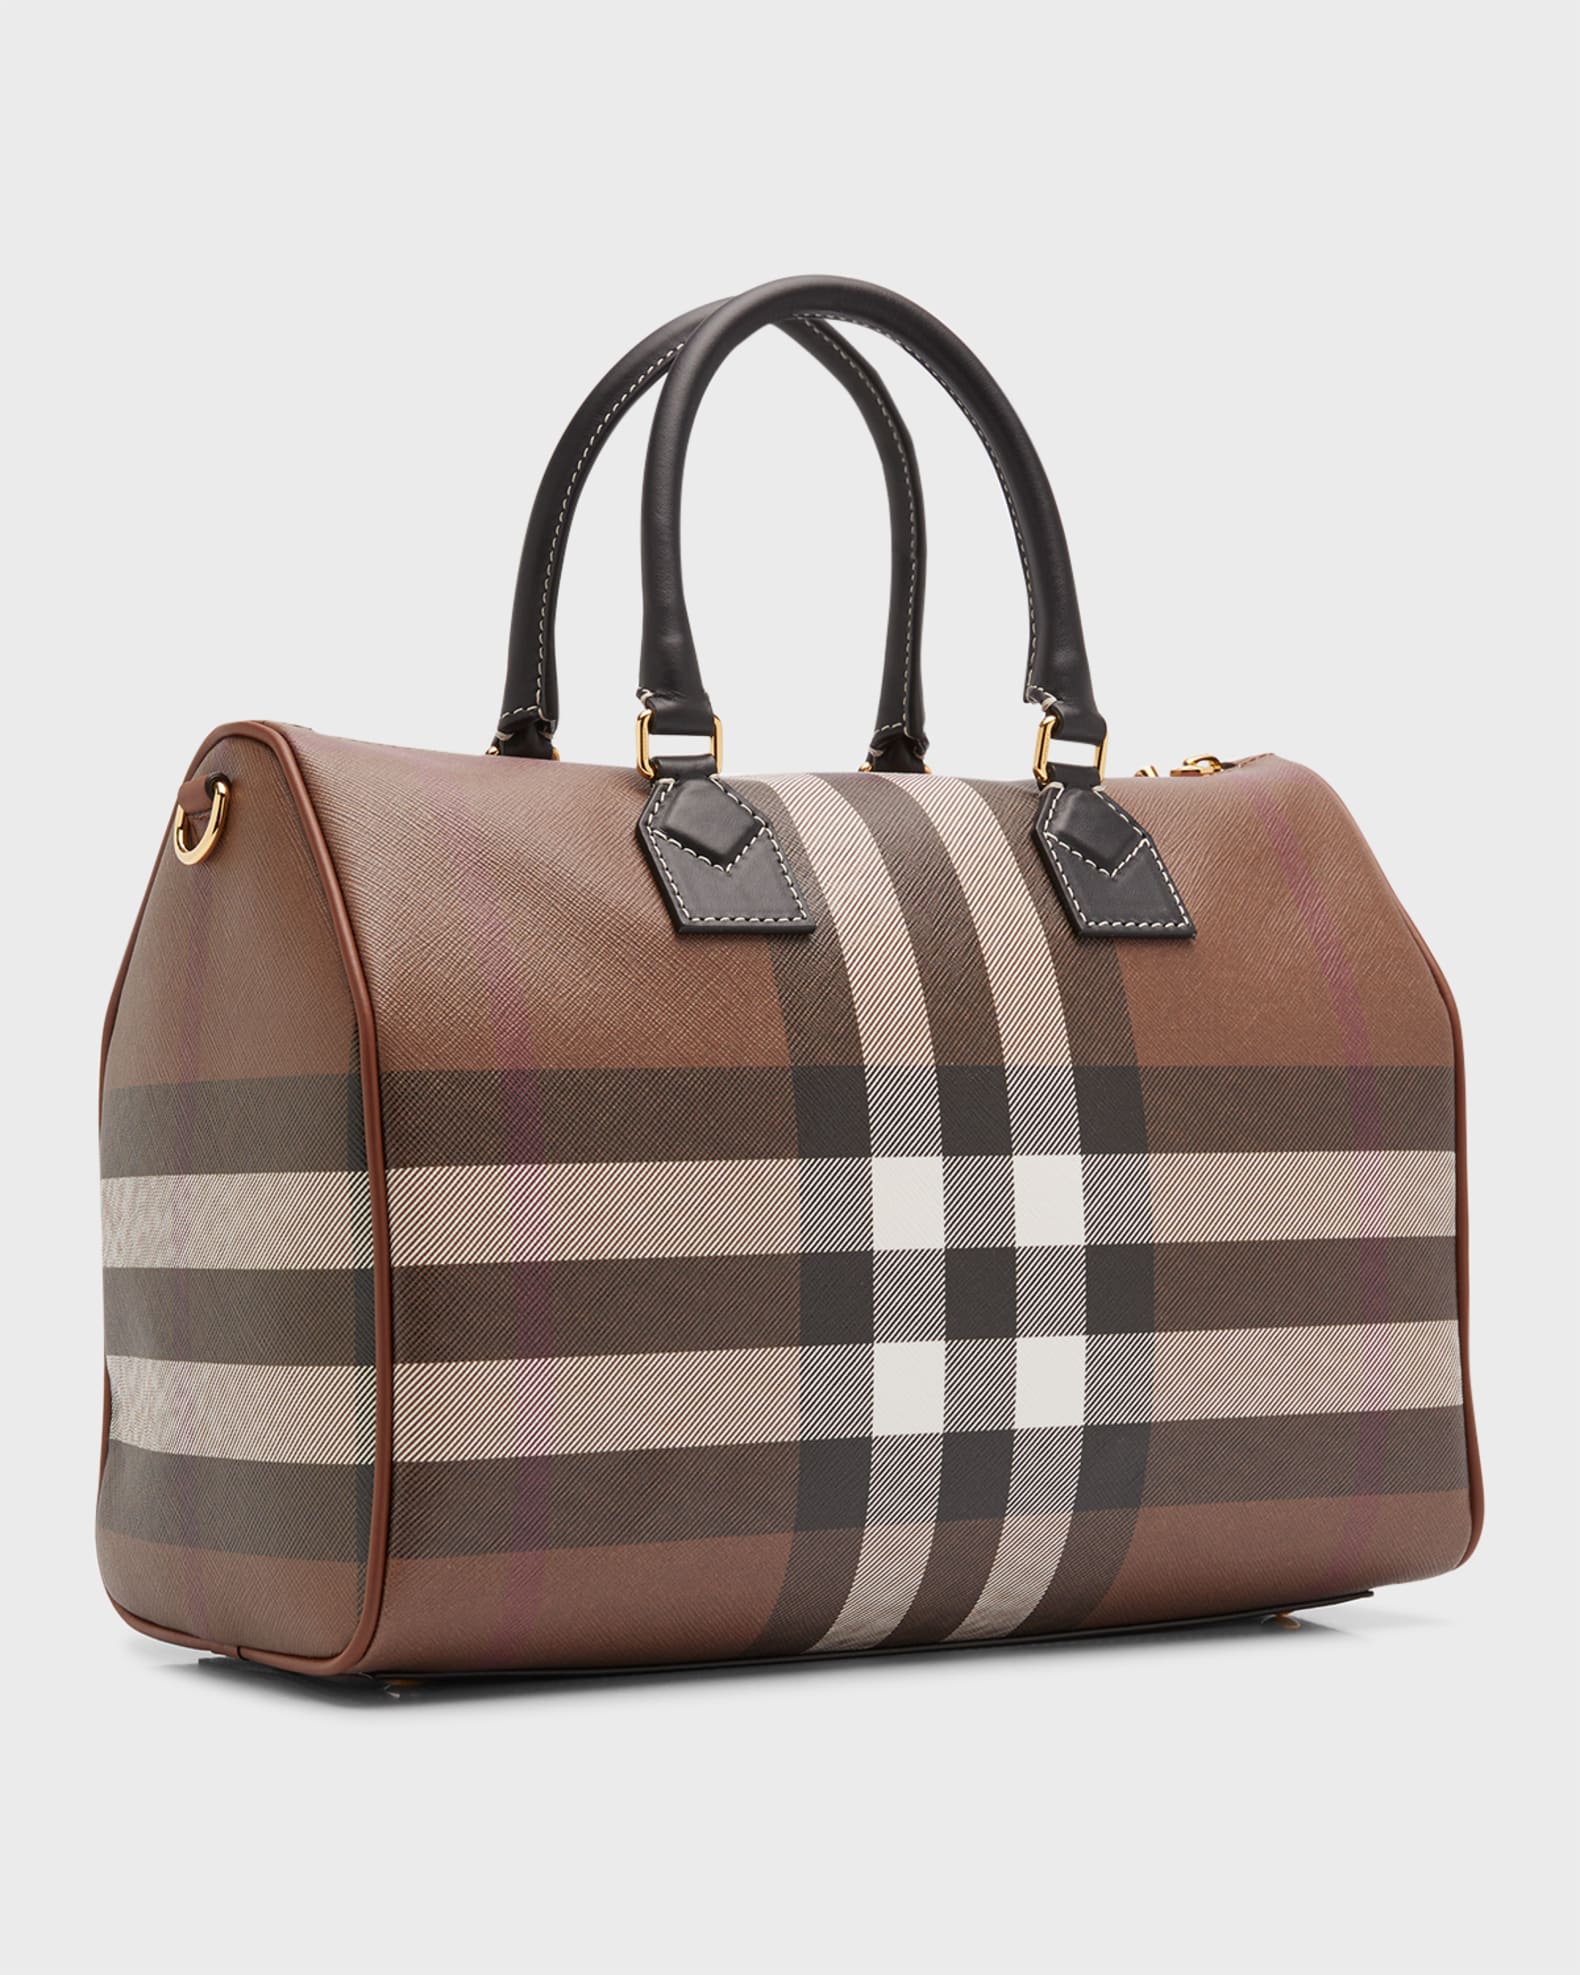 Louis Vuitton Bowling Bag Strap Replacement